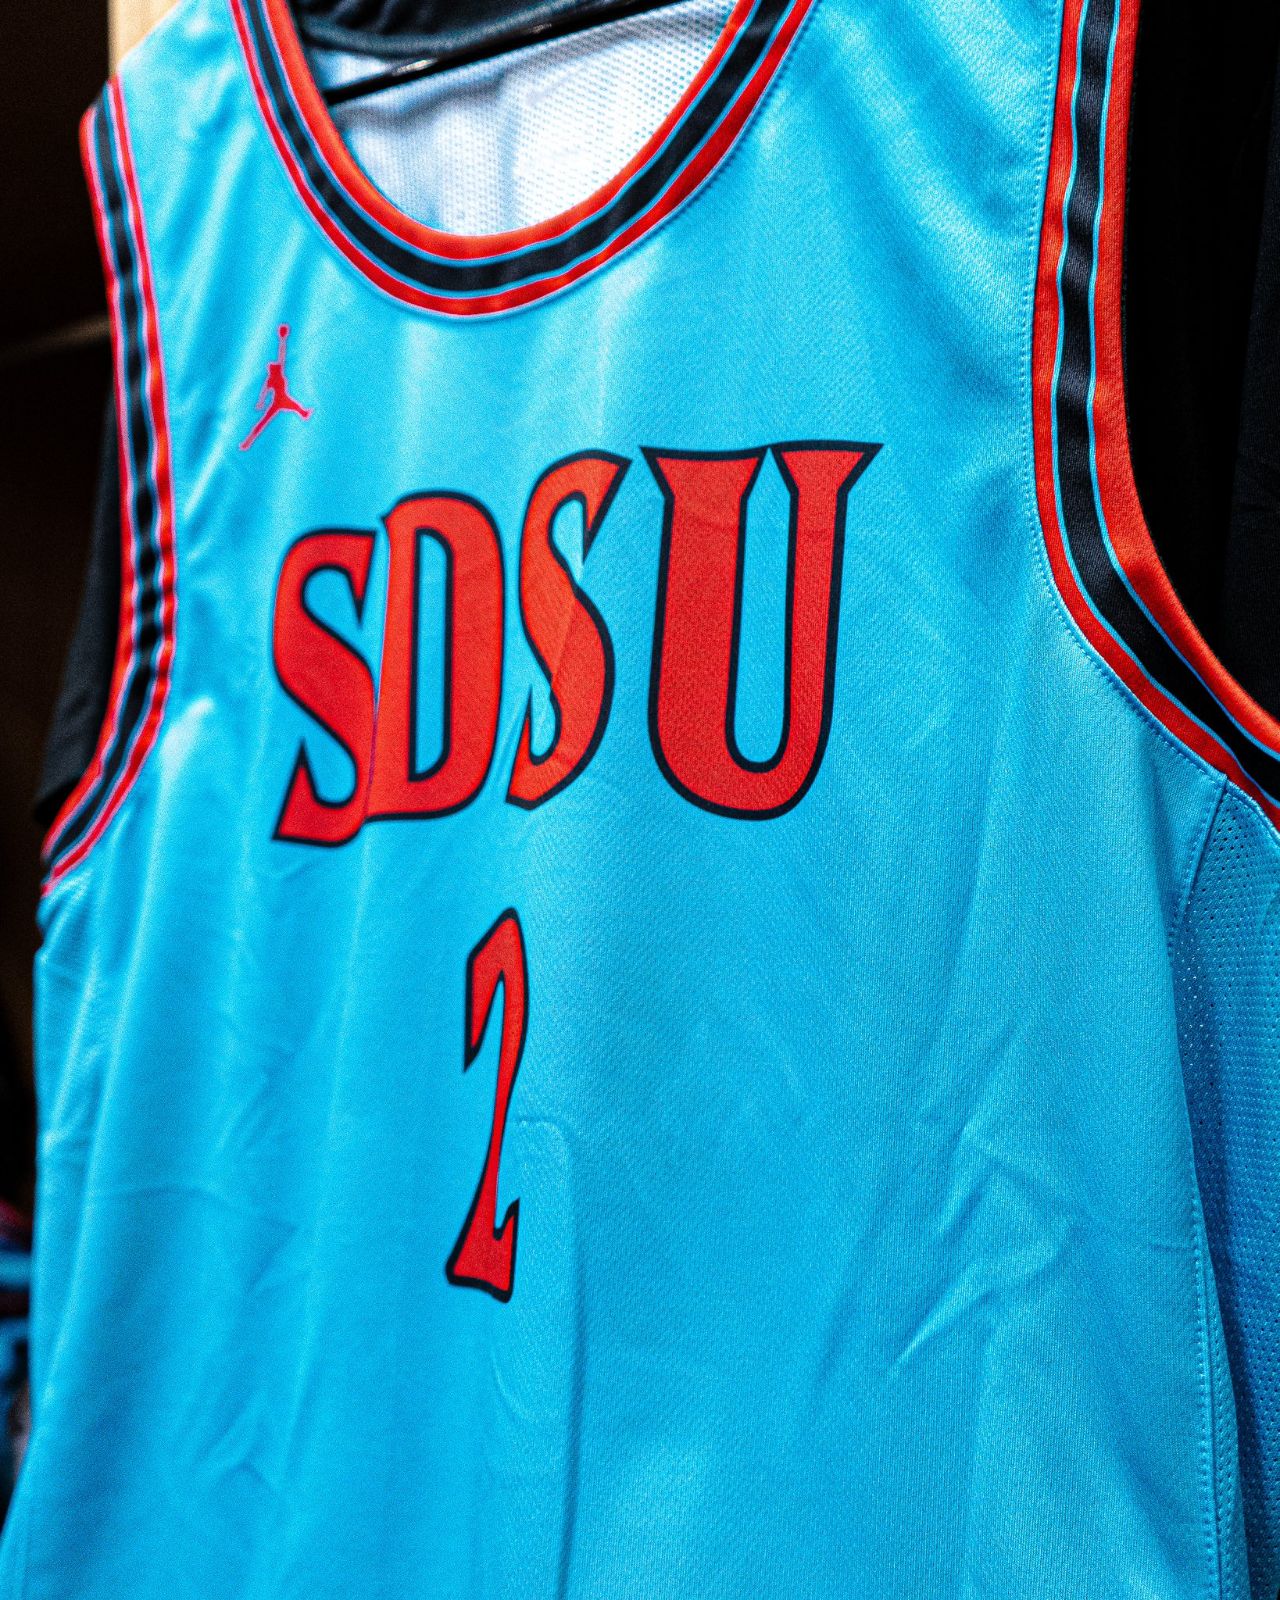 Men's Basketball to Wear Nike N7 Uniforms on Nov. 17 - SDSU Athletics